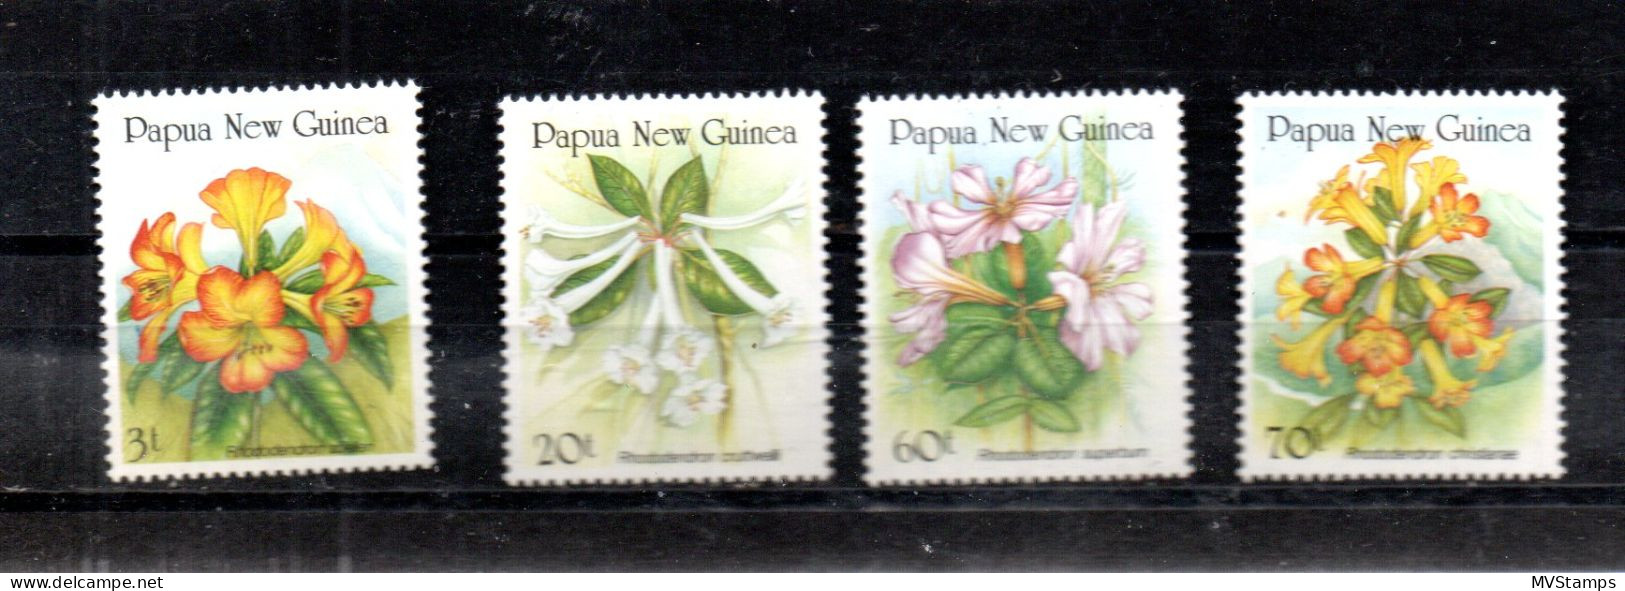 Papua Neuguinea 1989 Satz 584/87 Flowers/Rhododendren/Flora Postfrisch/MNH - Papúa Nueva Guinea